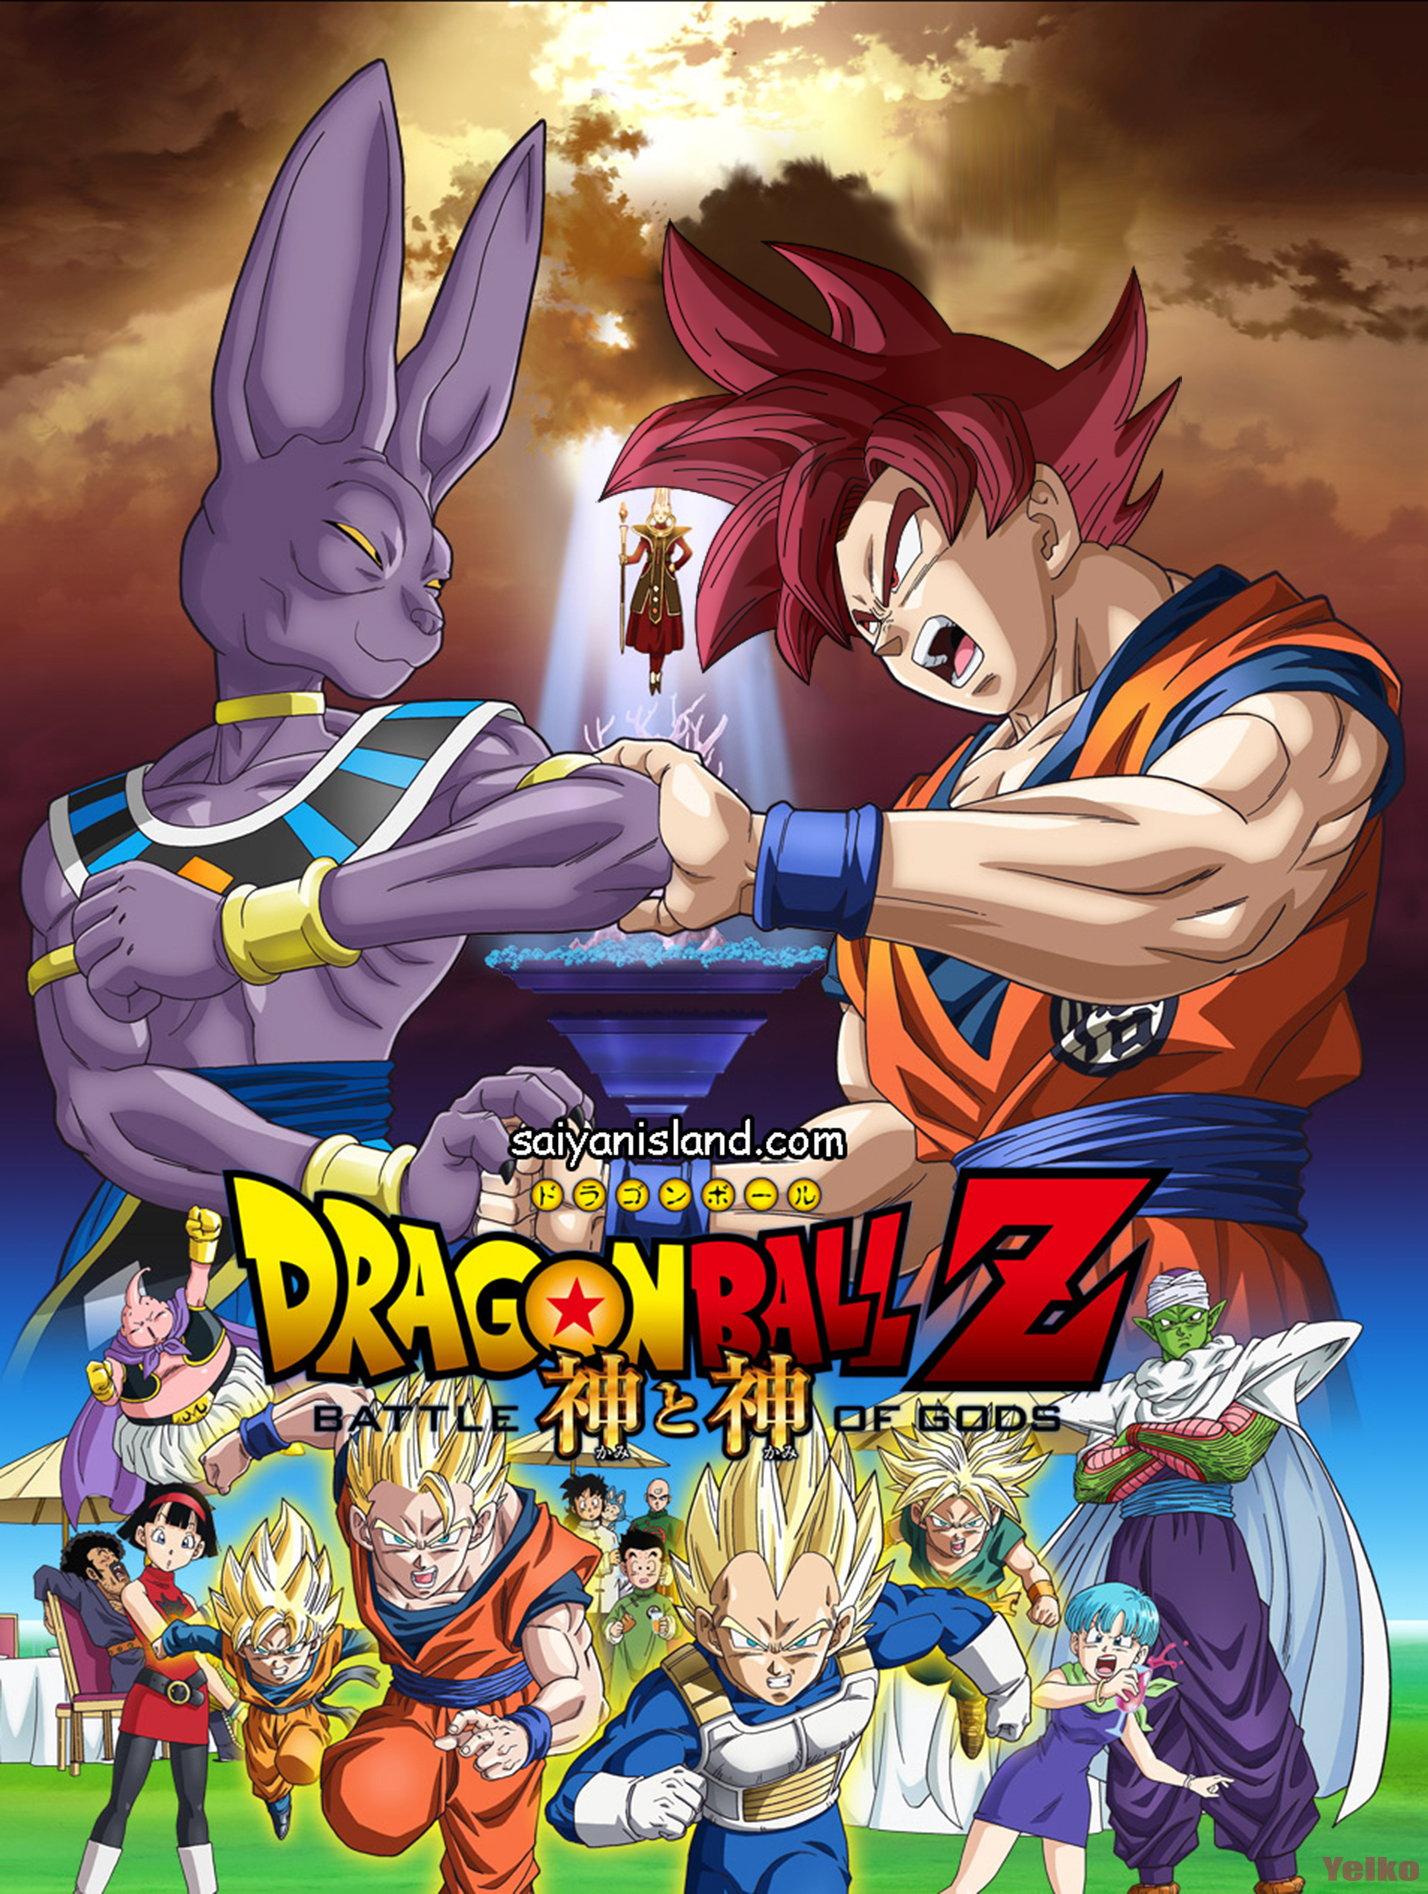 Dragon Ball Z Battle Of Gods Drawings HD Wallpaper, Background Image